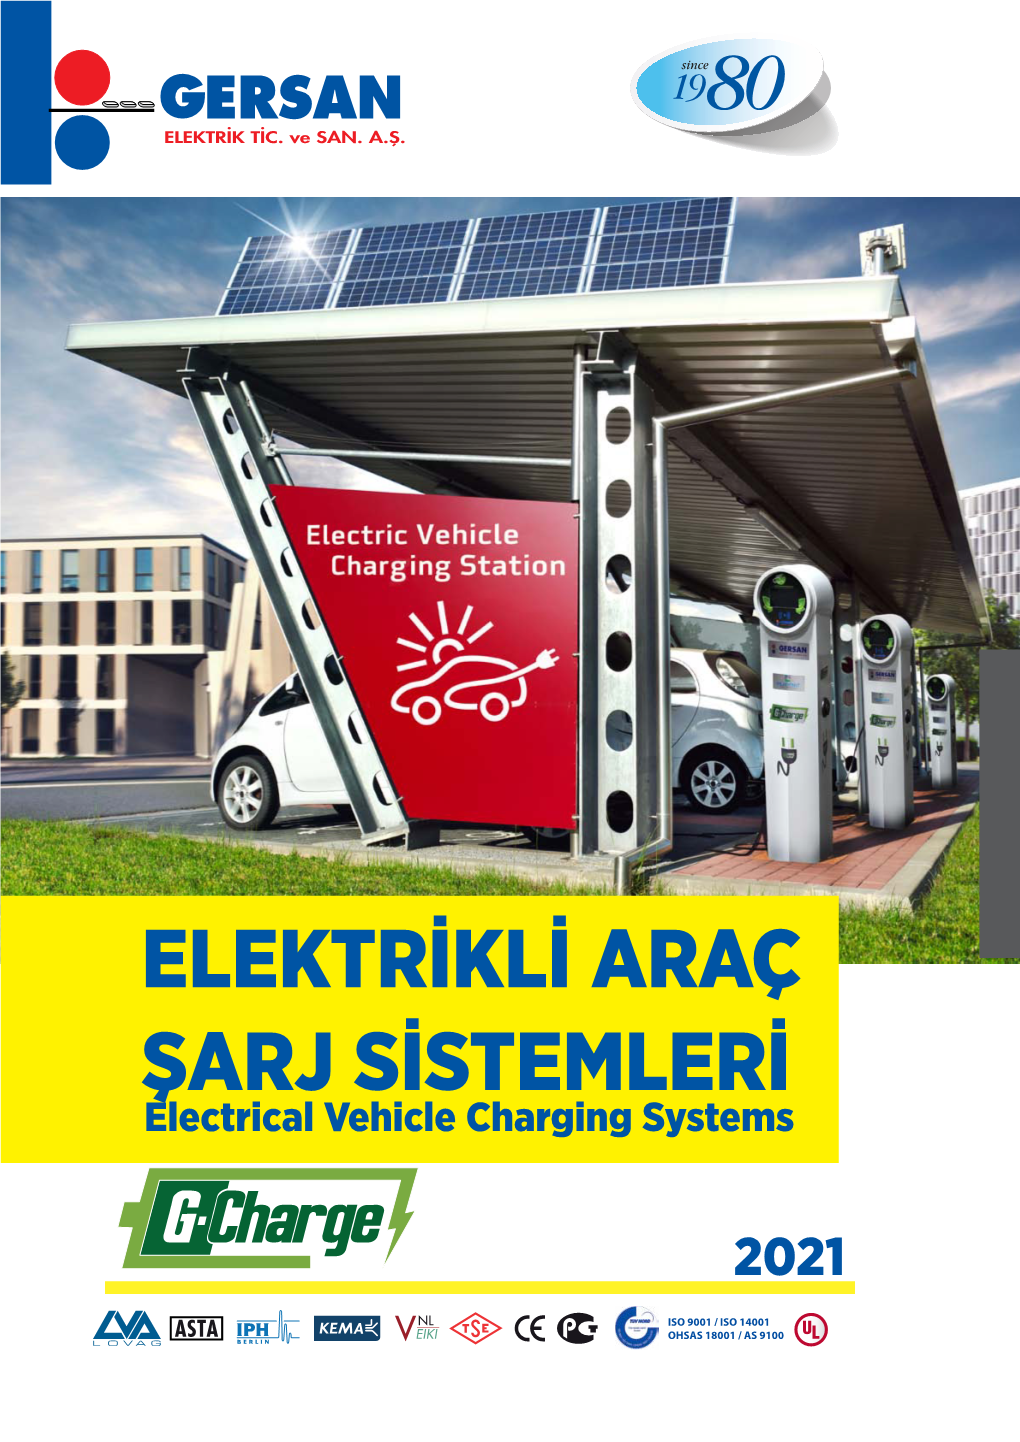 ELEKTRİKLİ ARAÇ ŞARJ SİSTEMLERİ Electrical Vehicle Charging Systems